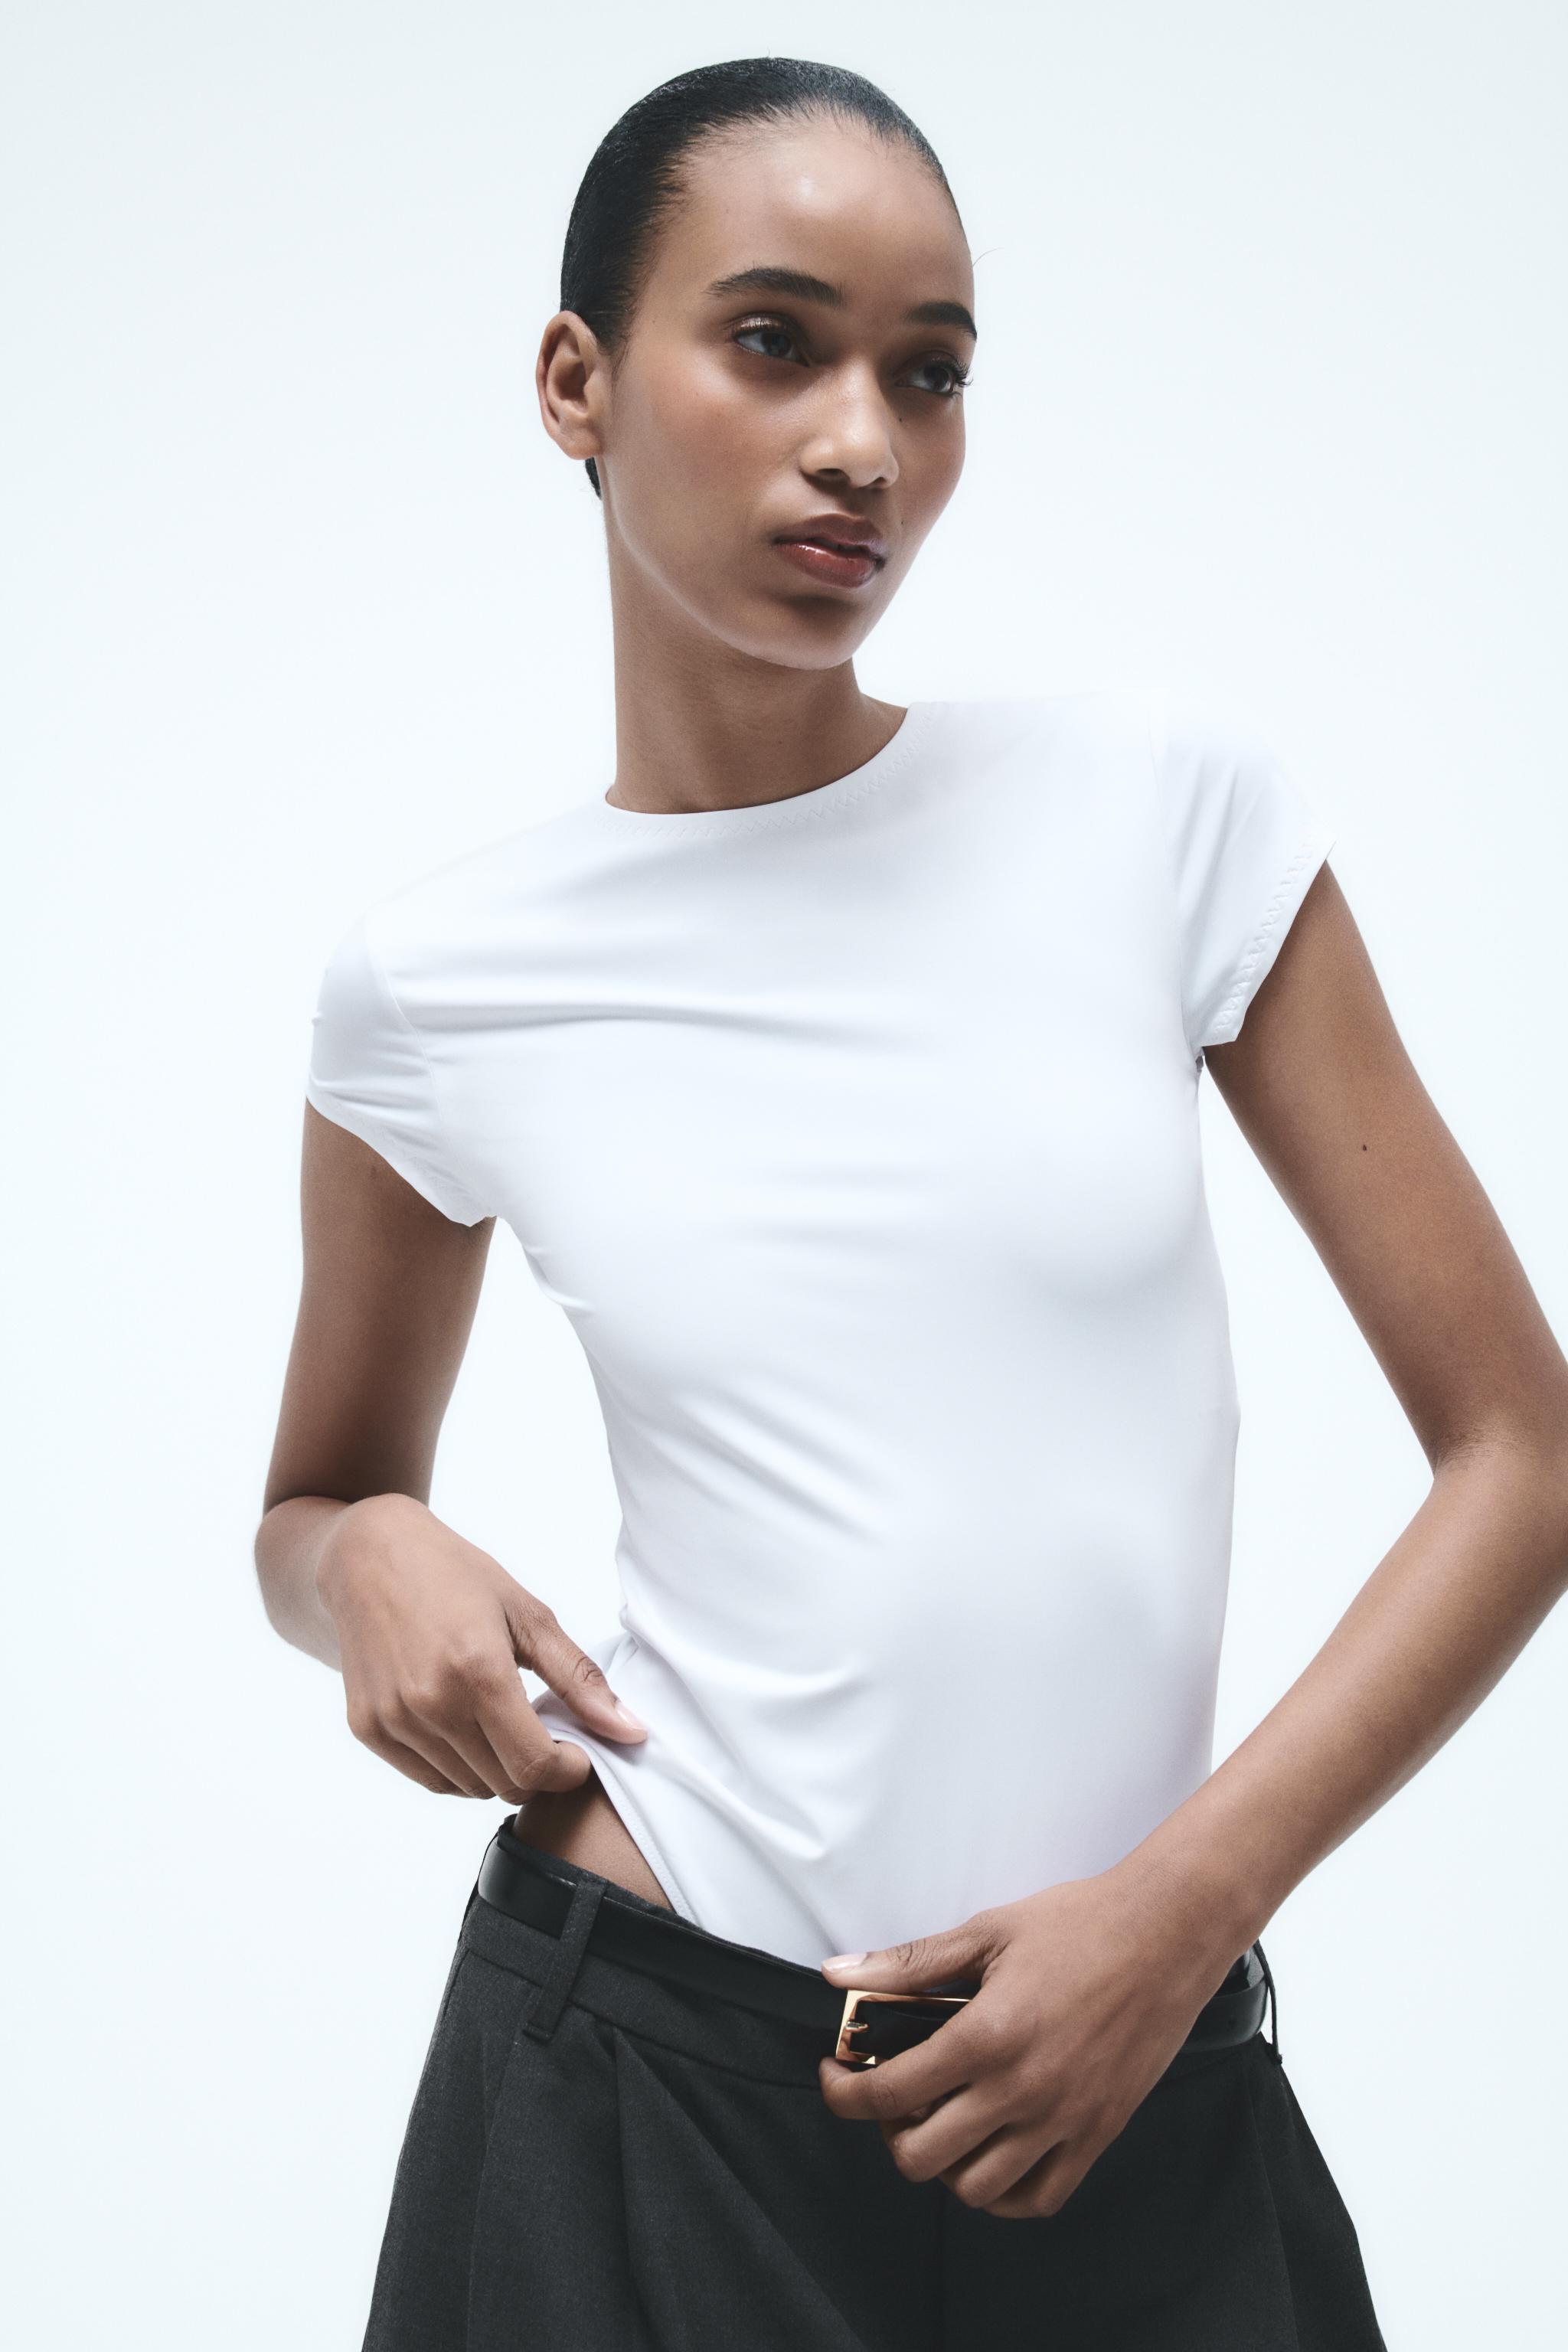 Zara LIMITLESS CONTOUR COLLECTION WHITE BODYSUIT size XS-S